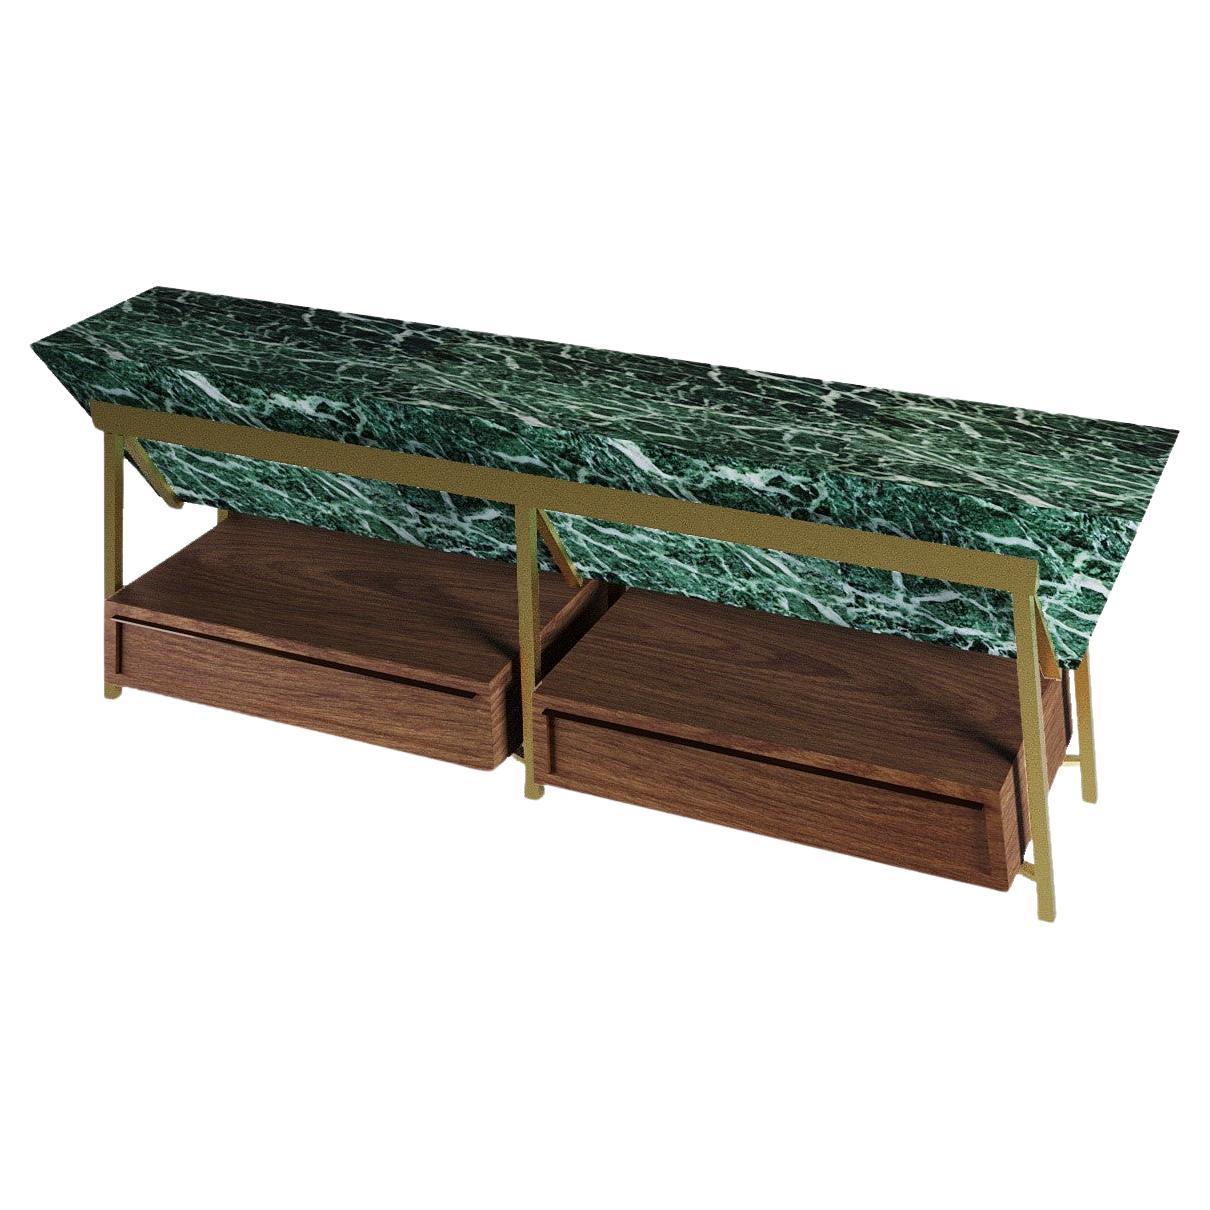 NORDST ANNE Console Table, Italian Green Lightning Marble, Danish Modern Design